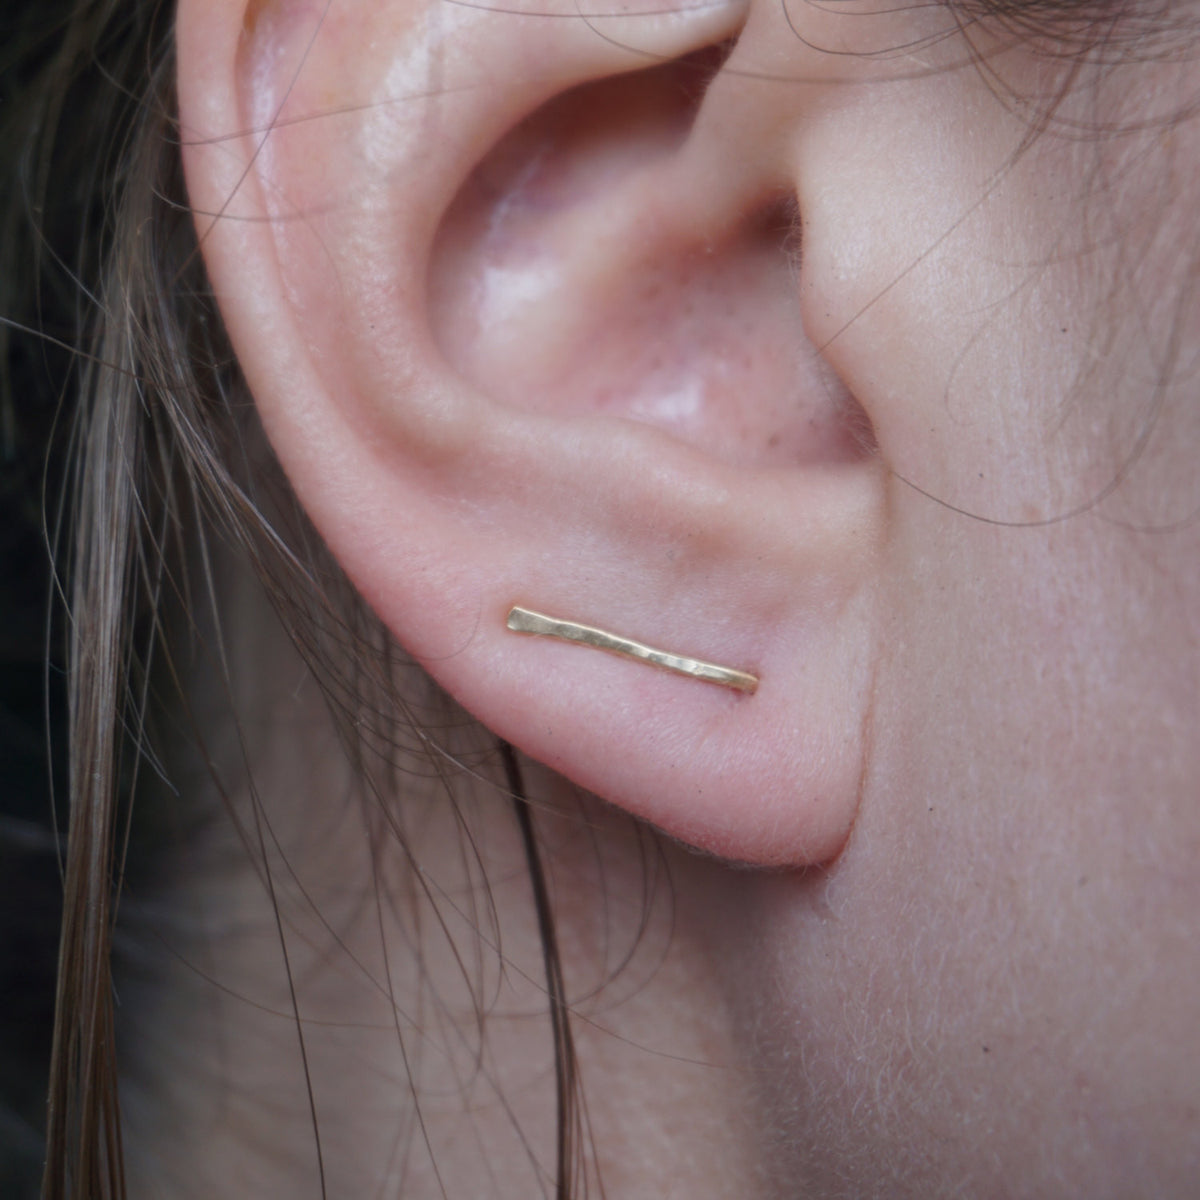 Indian Designer Earring Top 22k Gold Plated Stud Small Earrings Women's  Jewelry | eBay